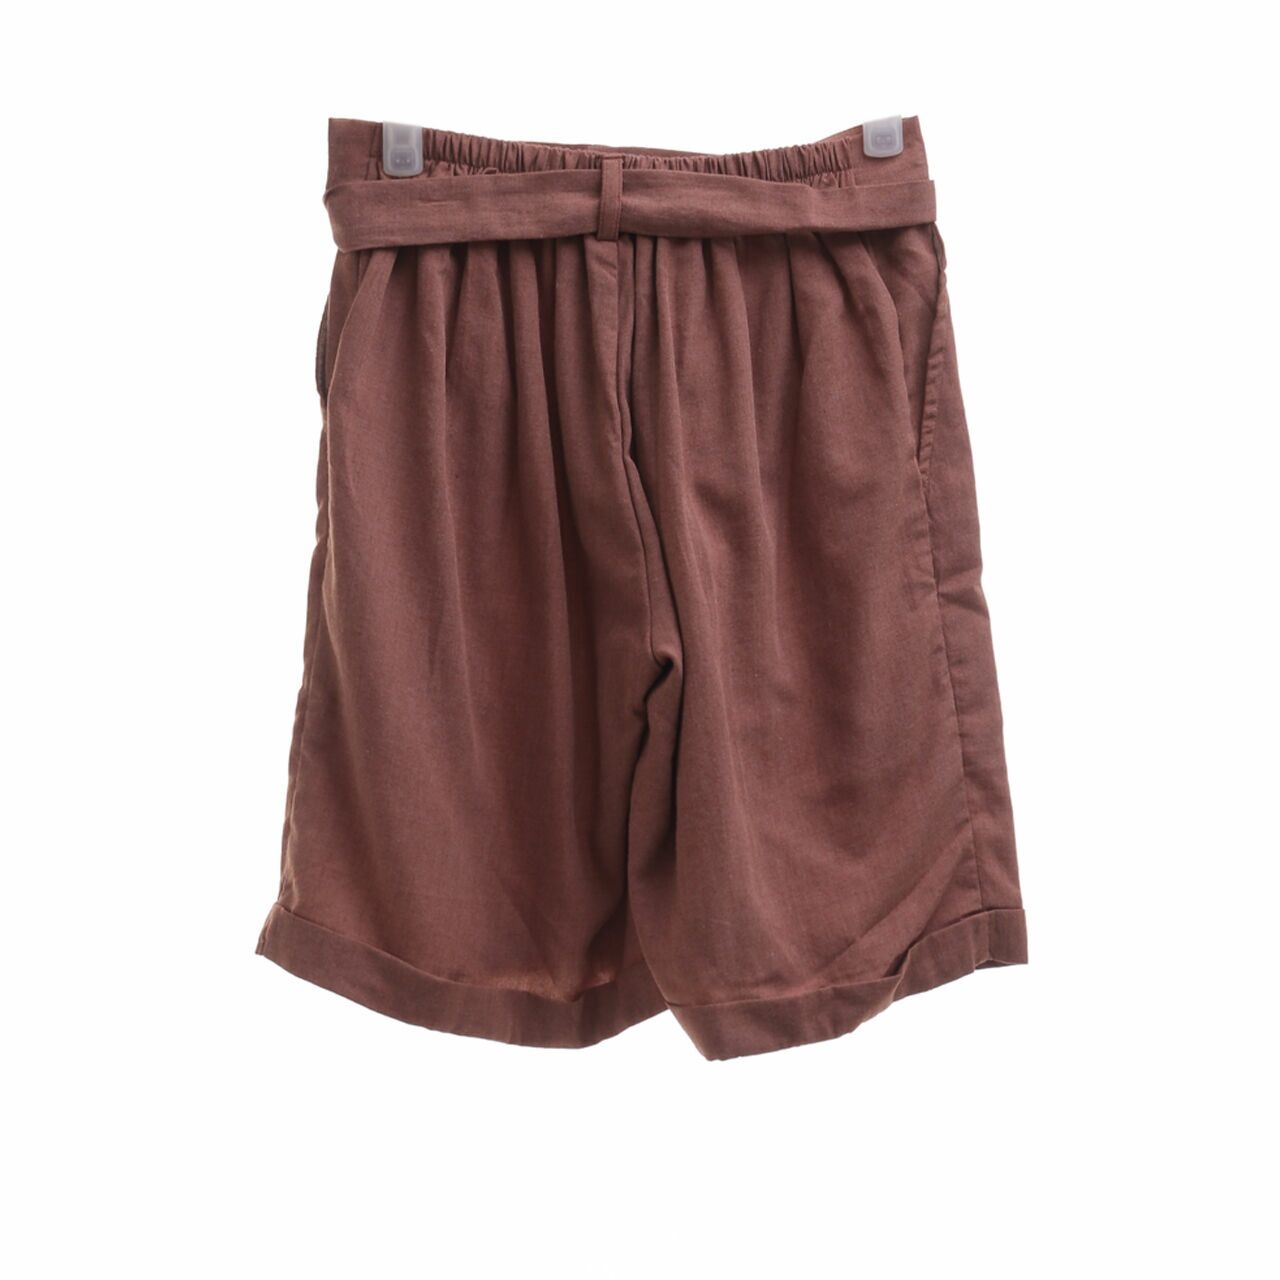 Chic & Darling Brown Shorts